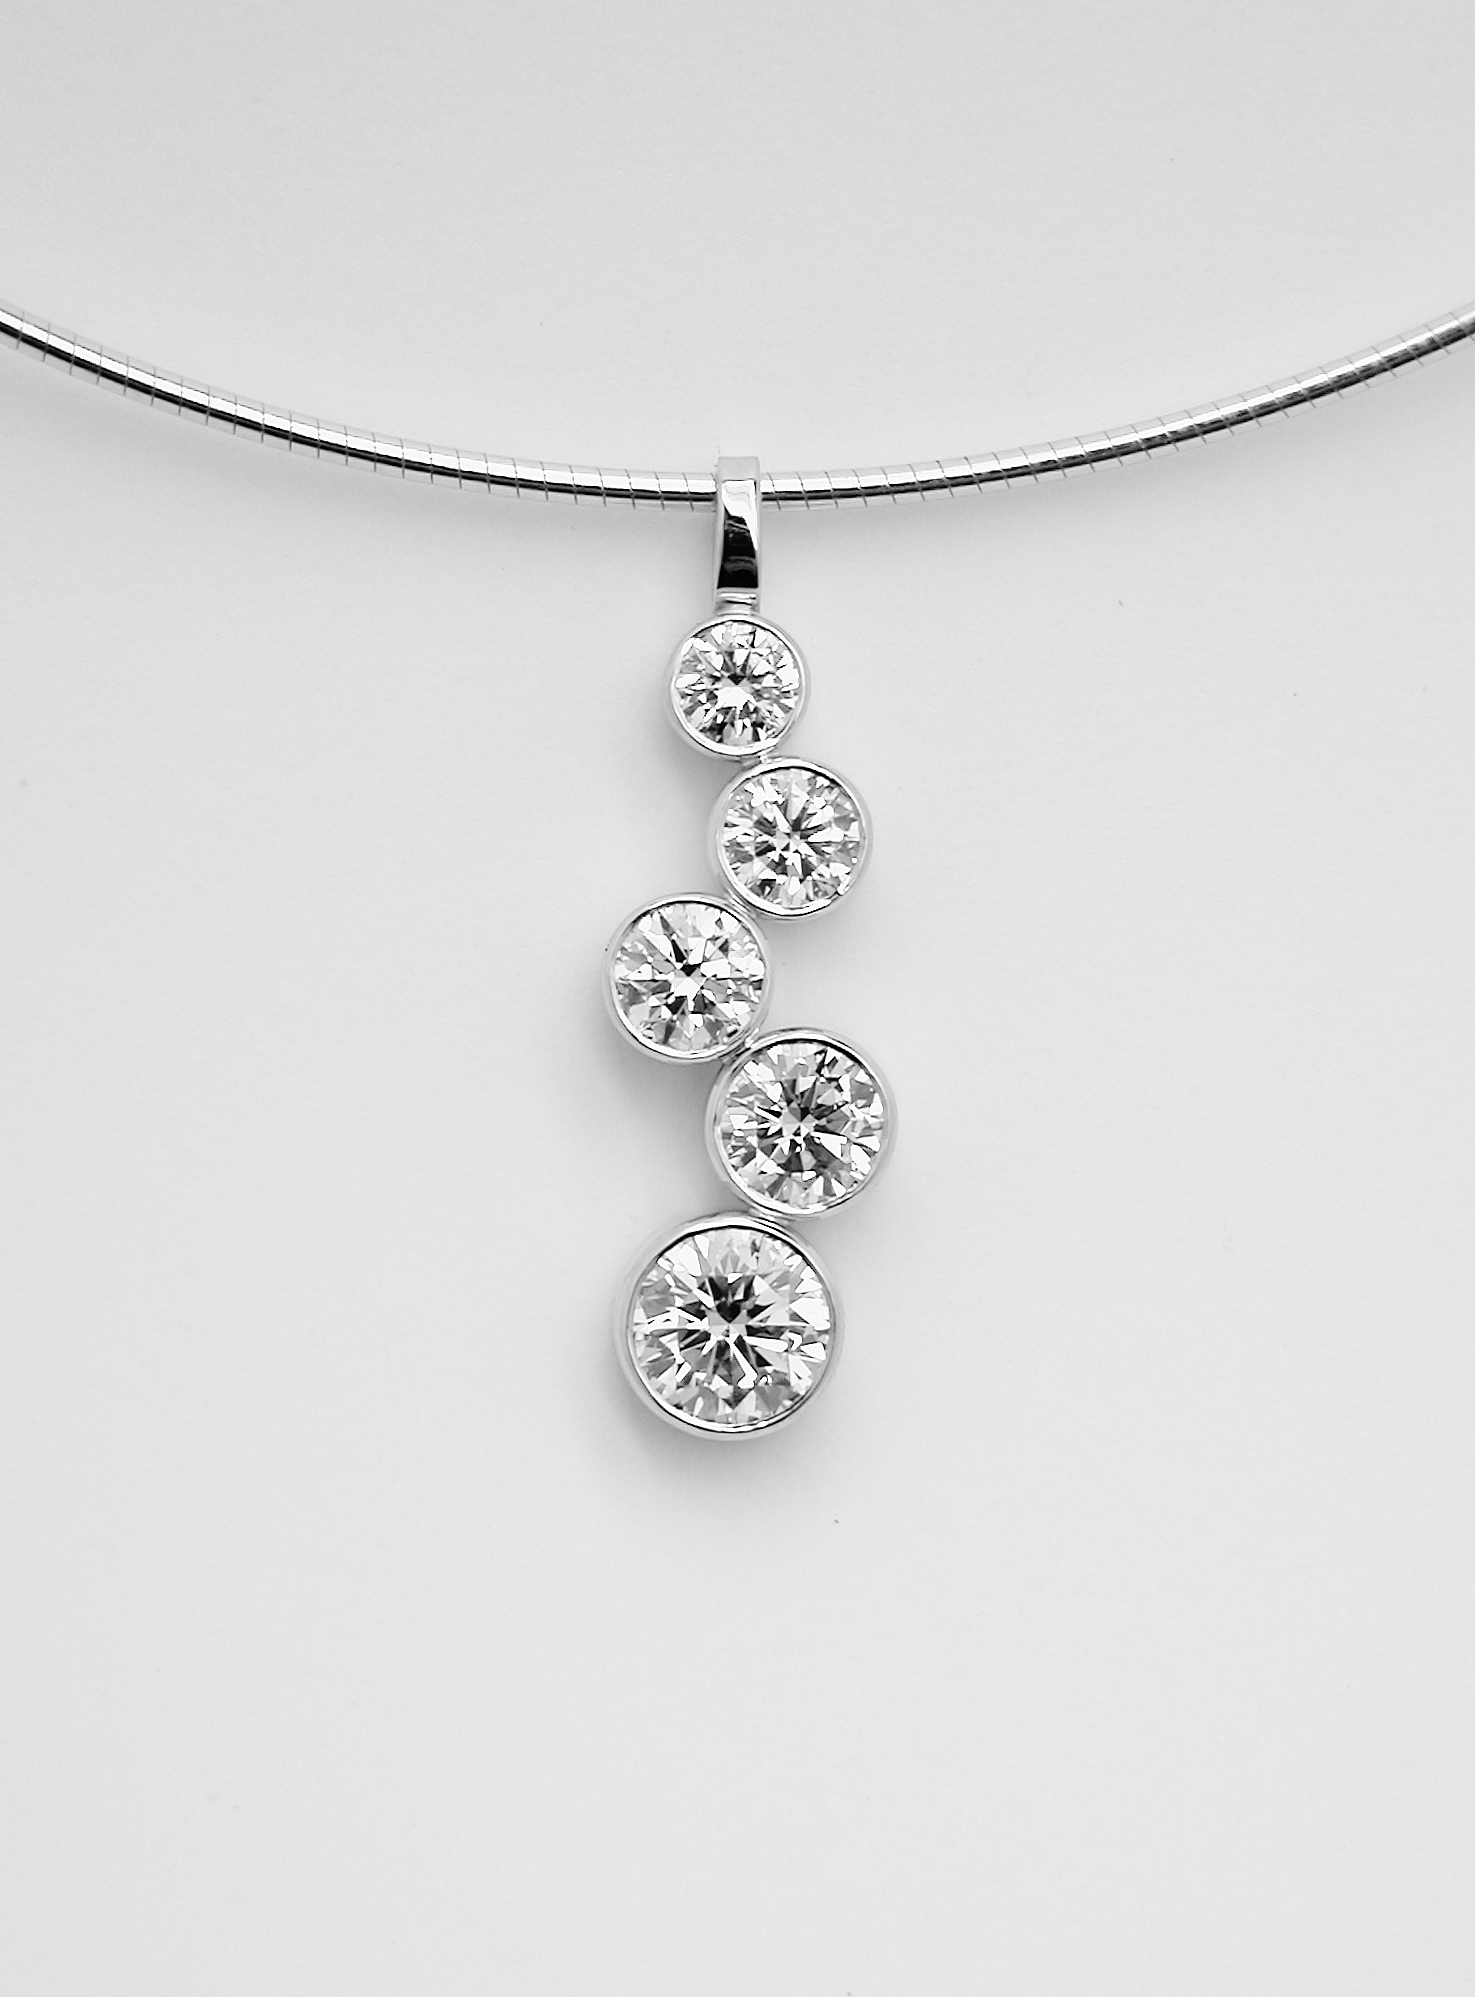 5 stone rub-over set round brilliant cut diamond 'tumble' pendant.